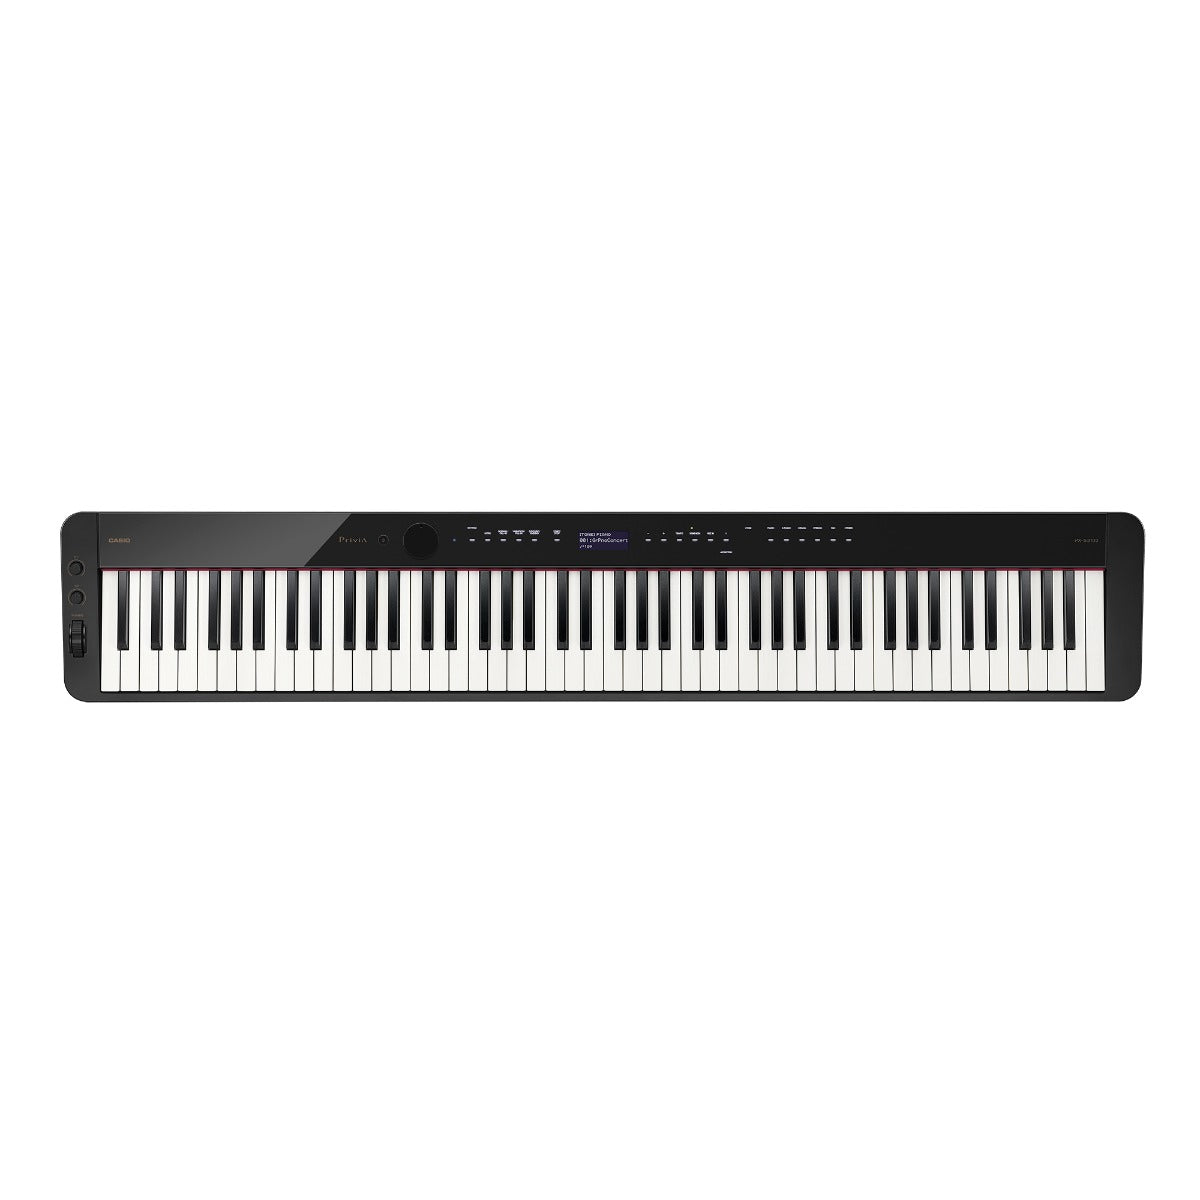 Casio PX-S3100 Digital Piano - Black, View 2